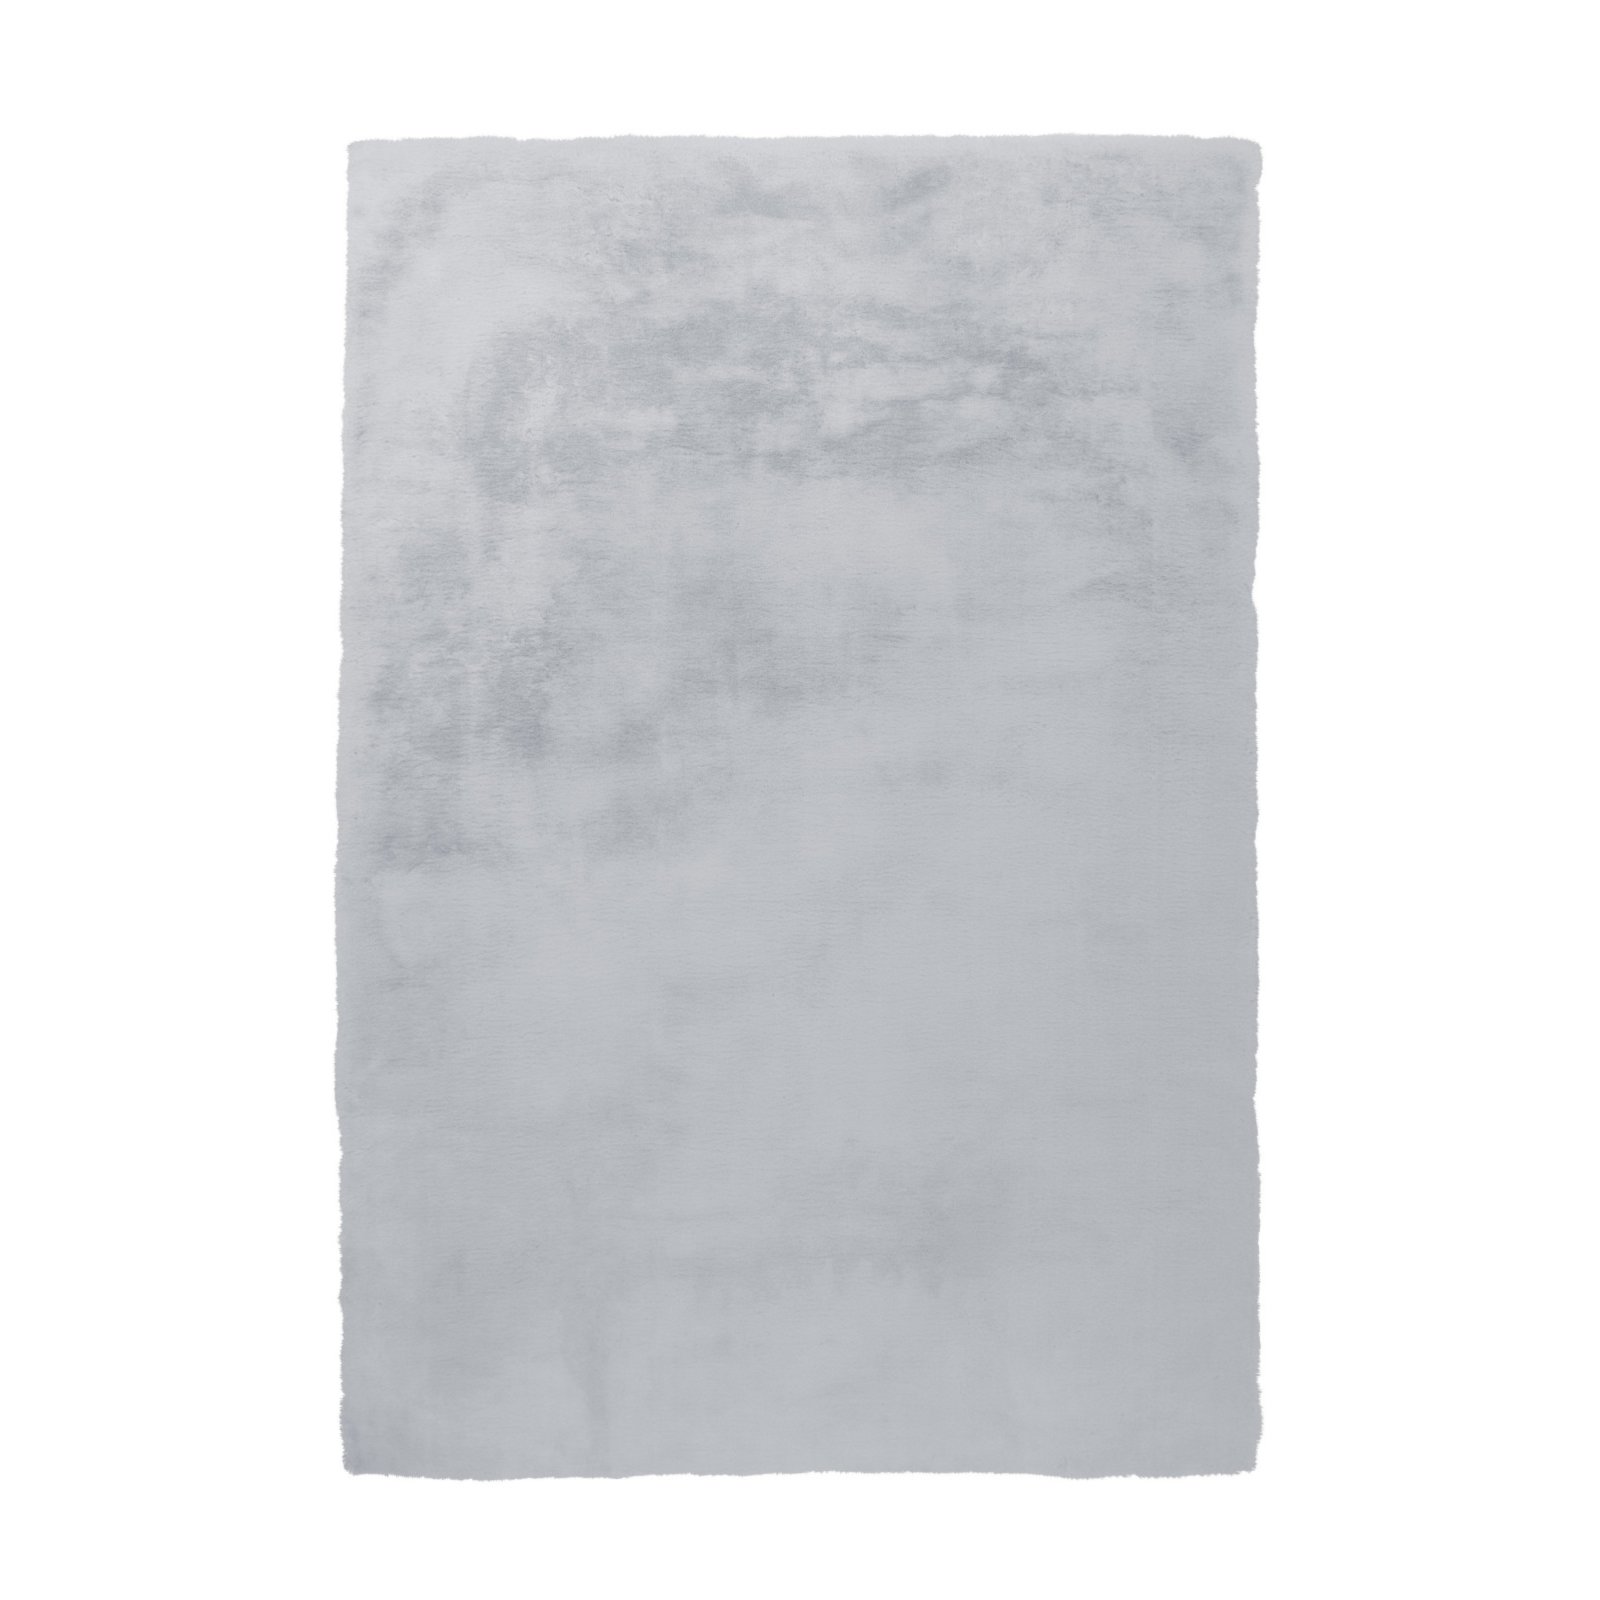 Kunstfell-Teppich - Kaninchenfell-Haptik - grau-blau bei 160x230 Online kaufen cm ROLLER - 